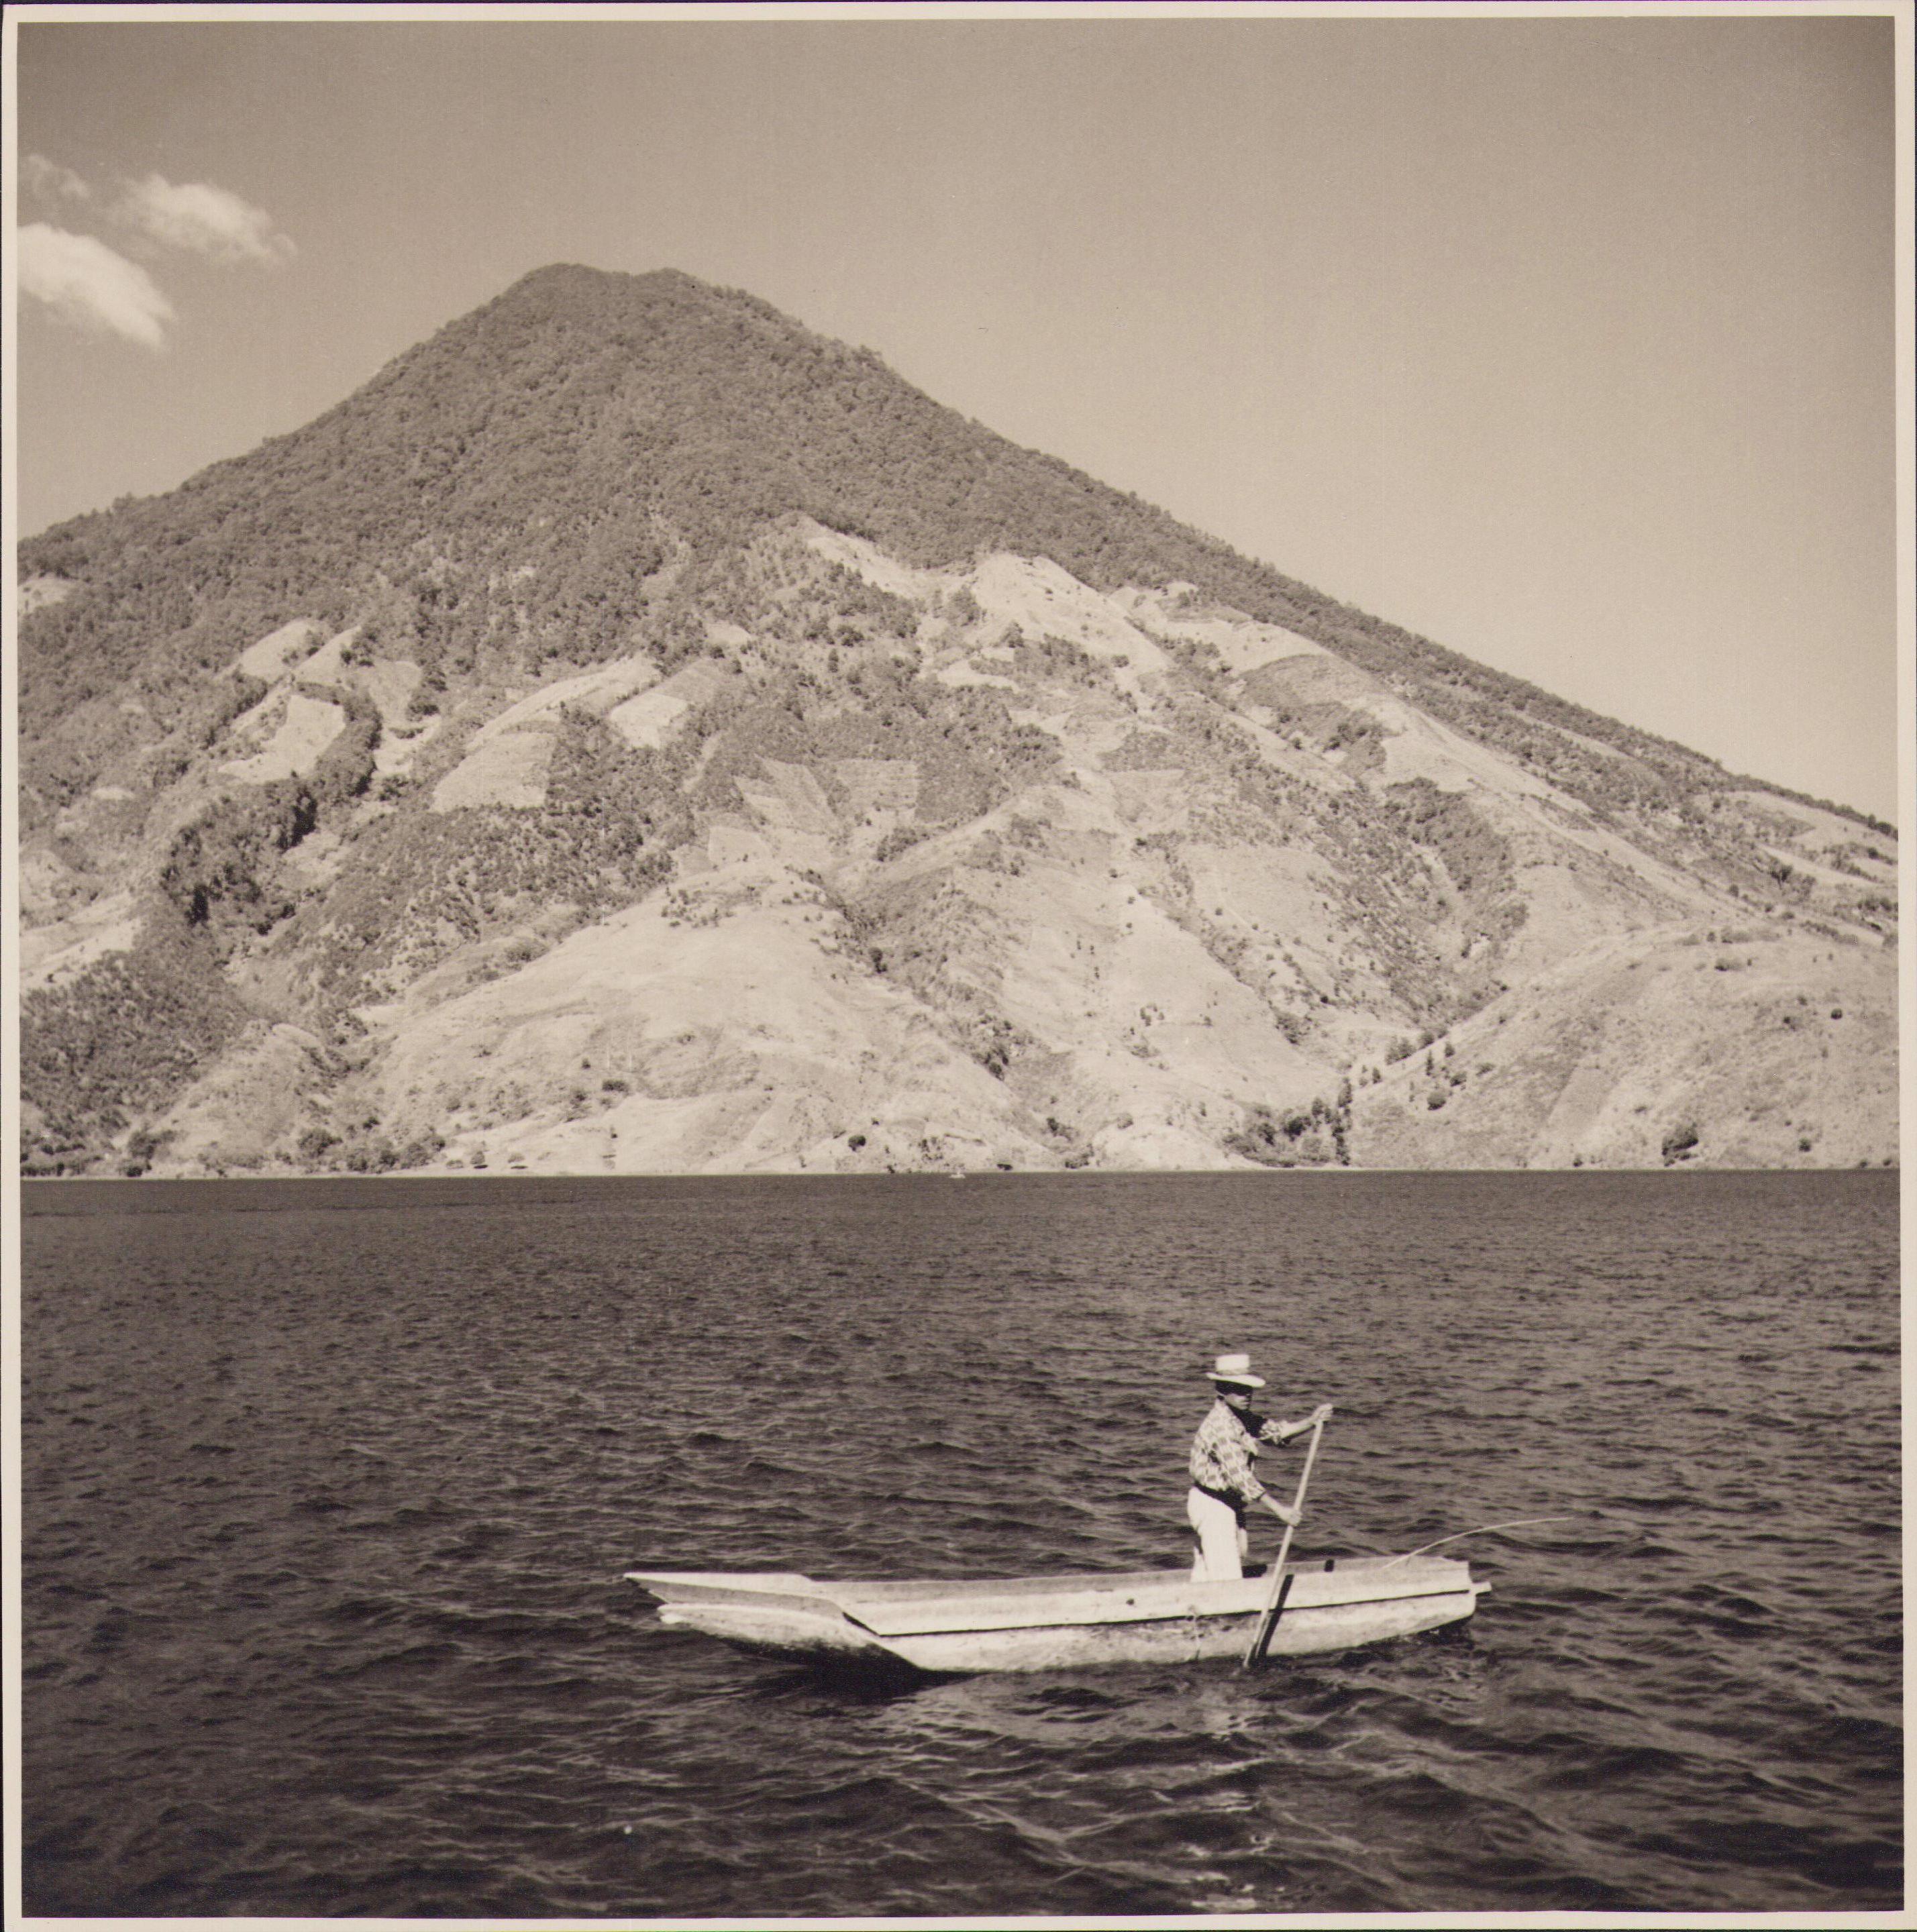 Hanna Seidel Portrait Photograph - Guatemala, Lake, Black and White Photography, ca. 1960s, 24, 1 x 24 cm